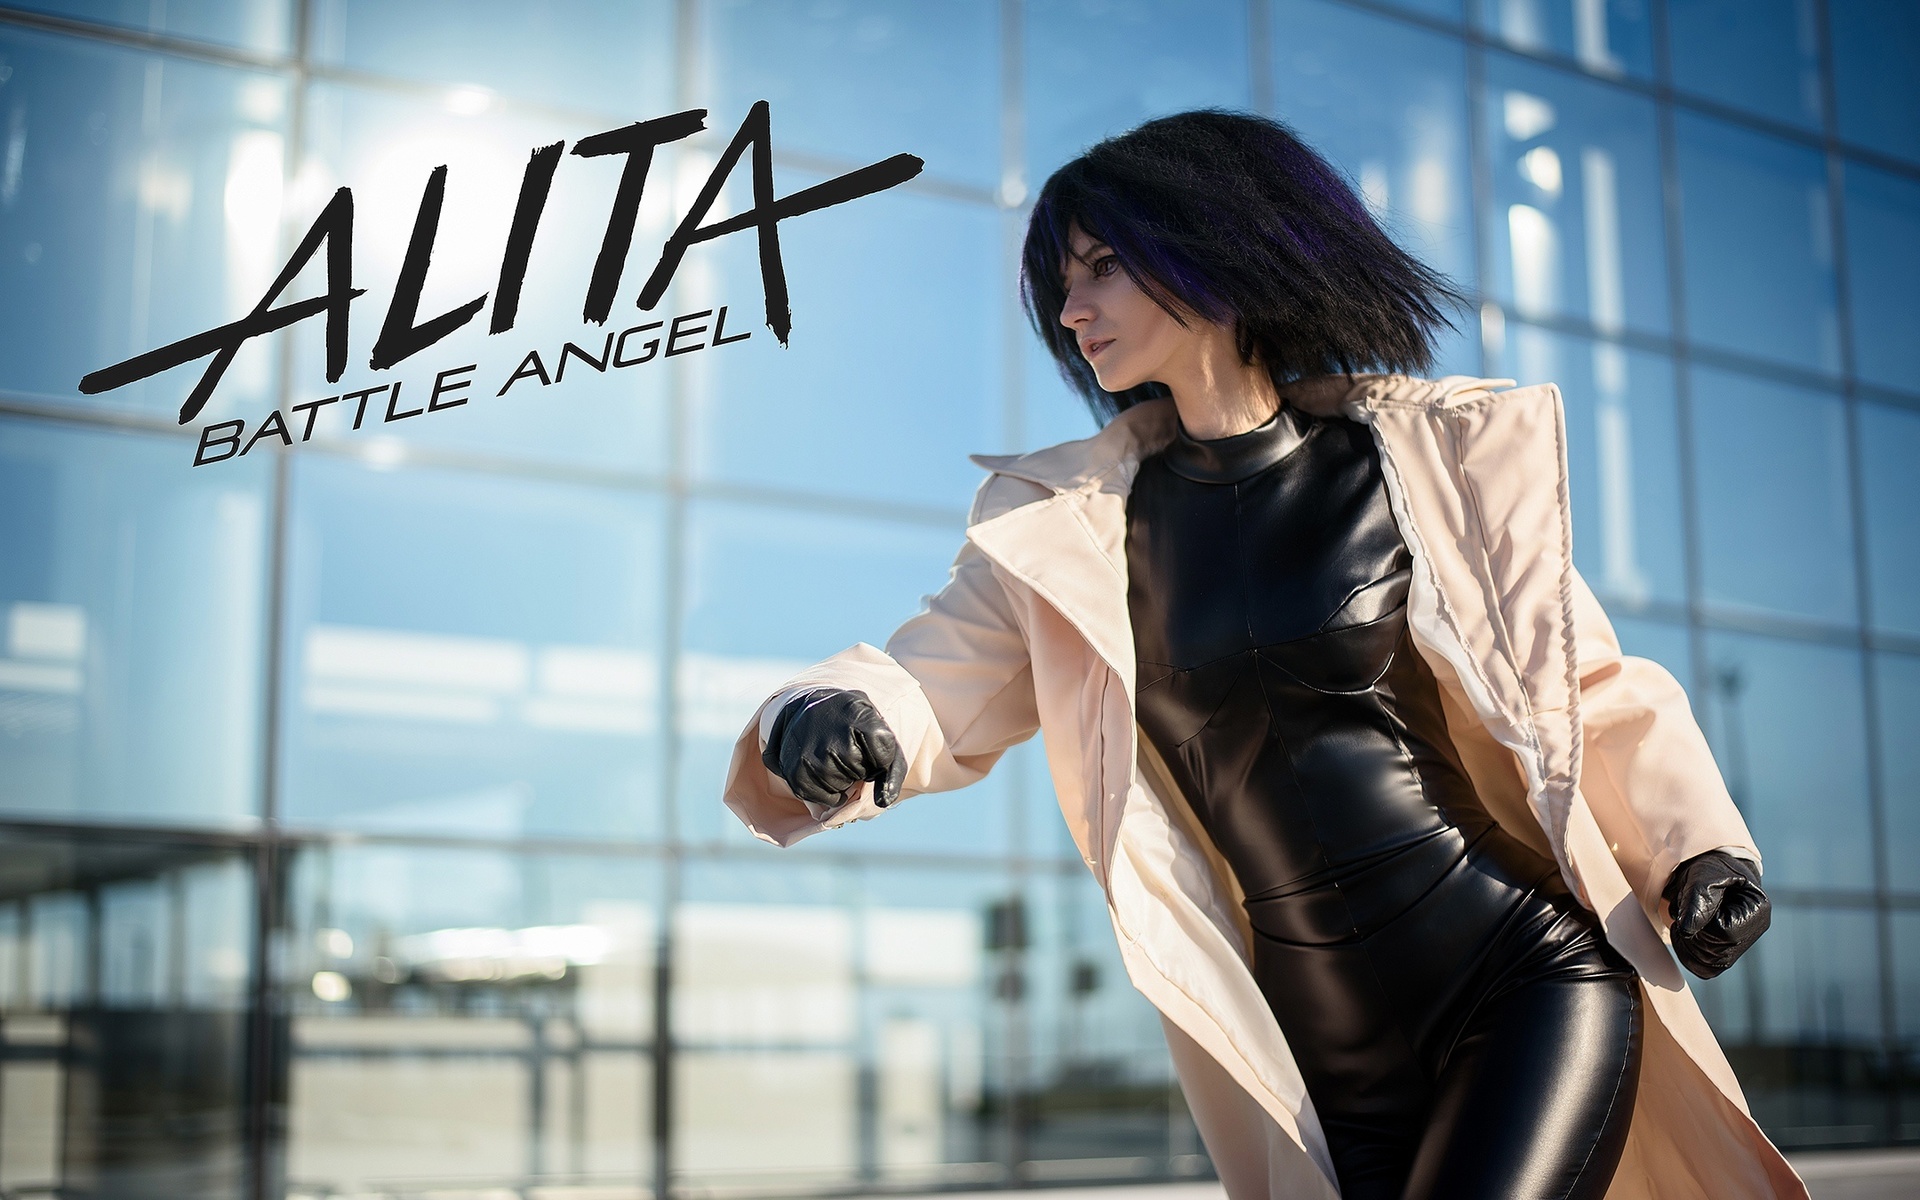 alita battle angel, cosplay, girl, battle angel alita